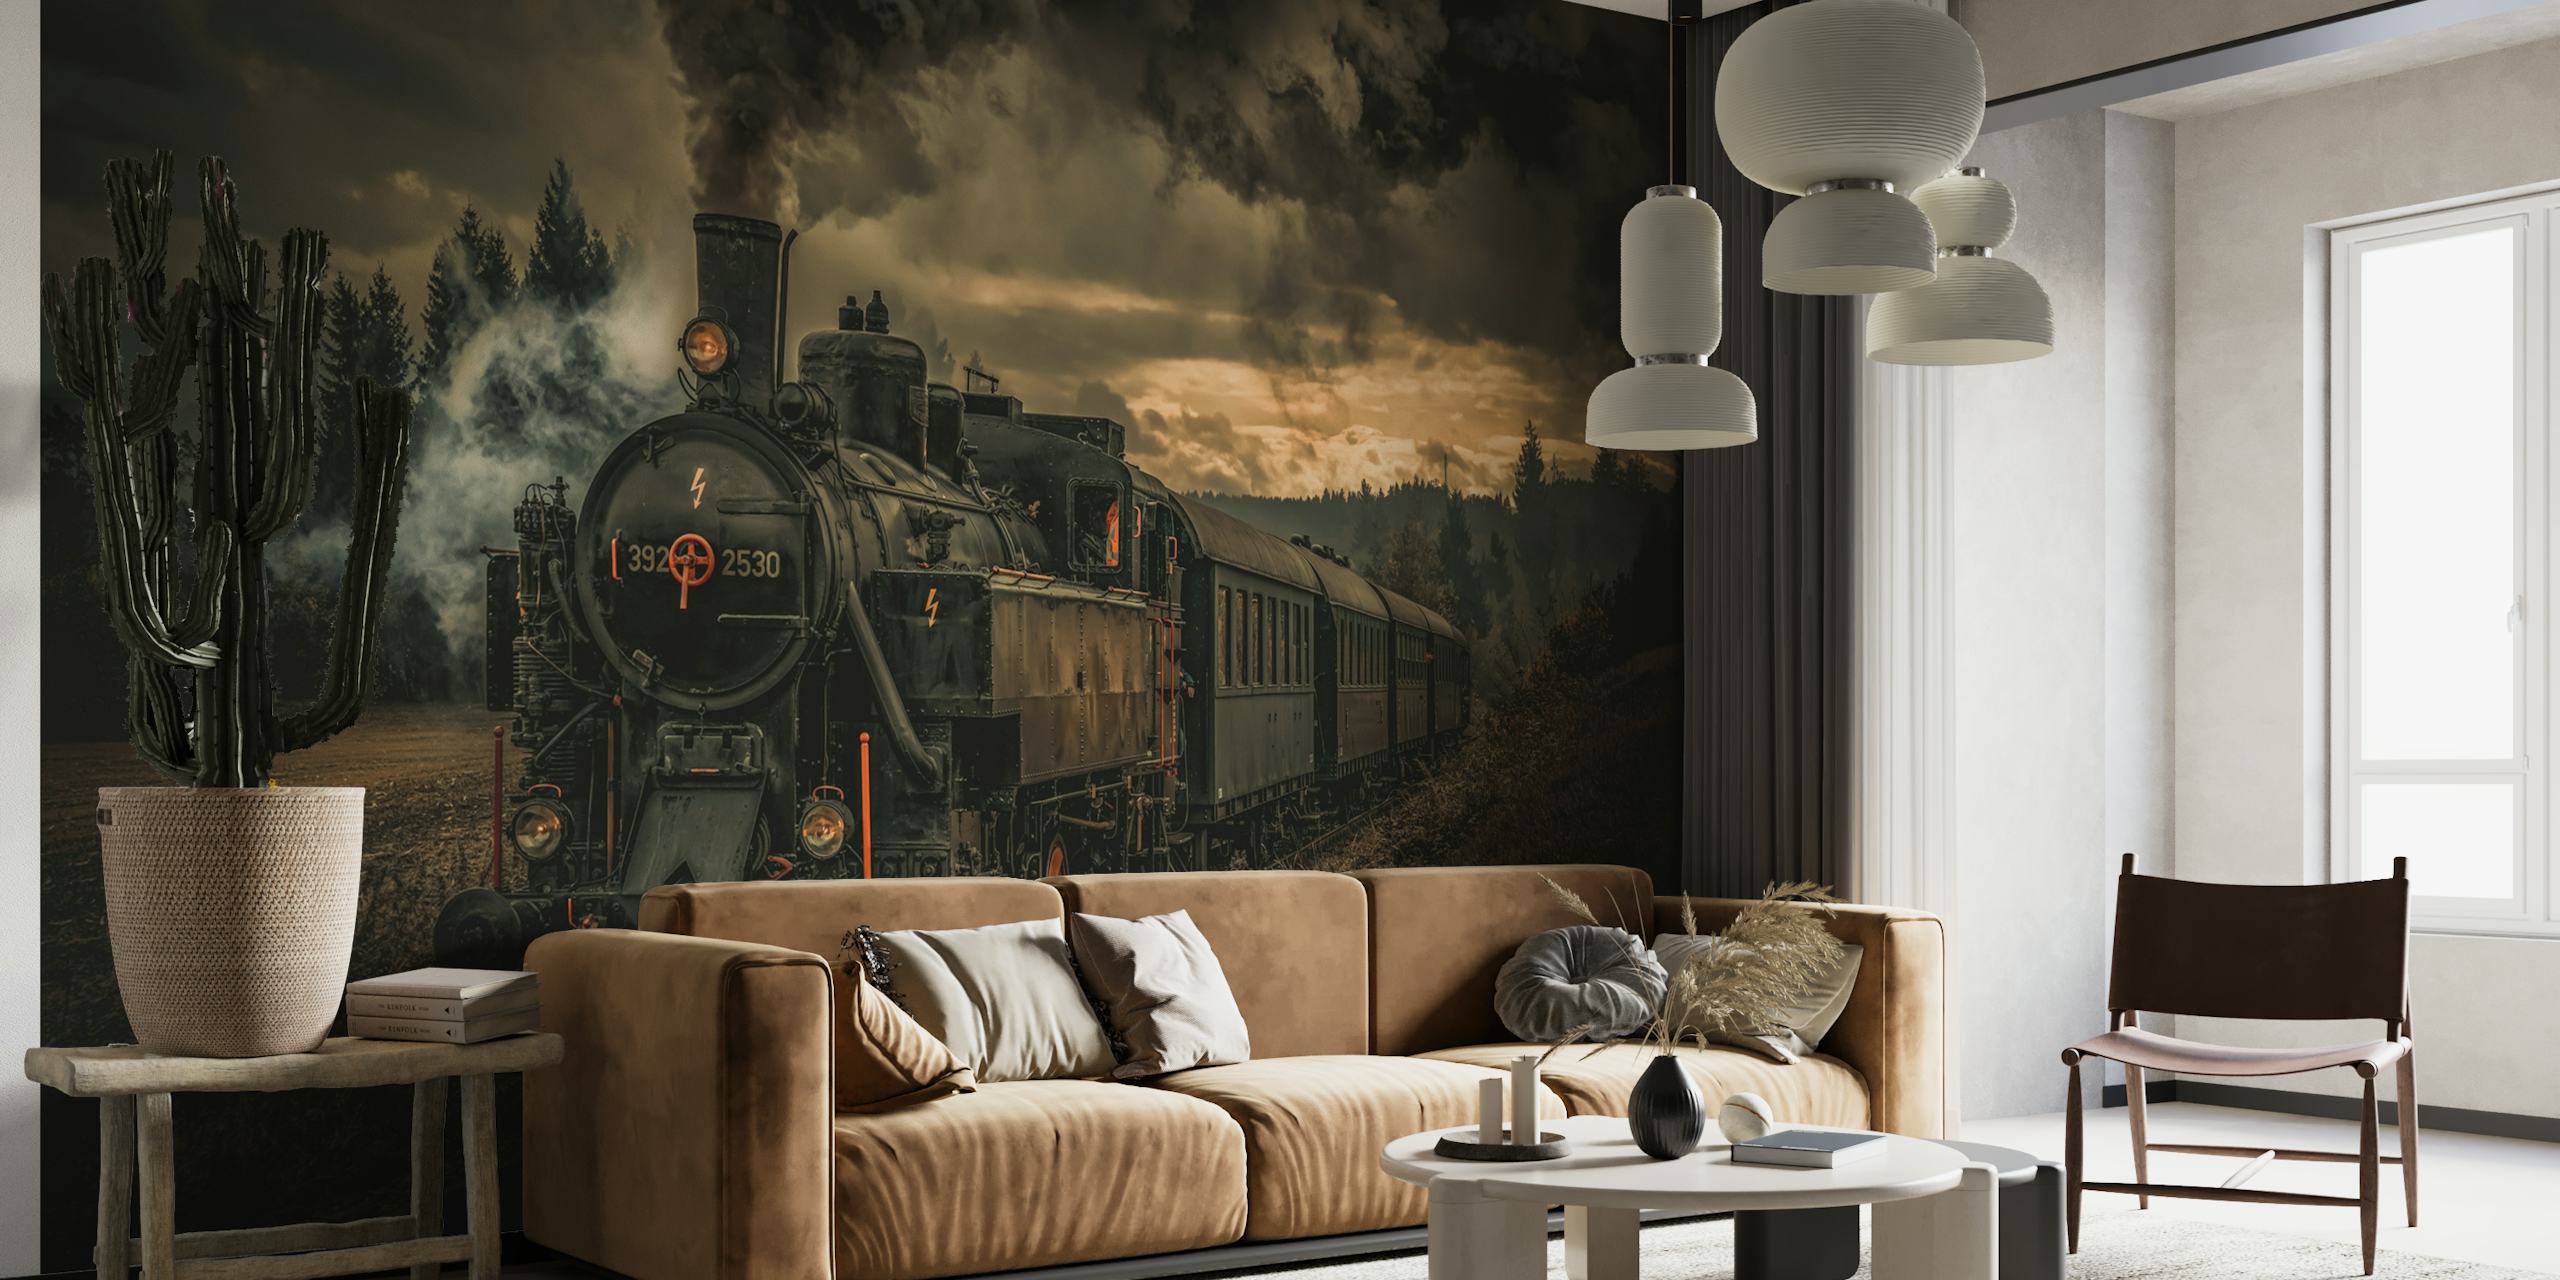 Vintage steam train wall mural with moody skies